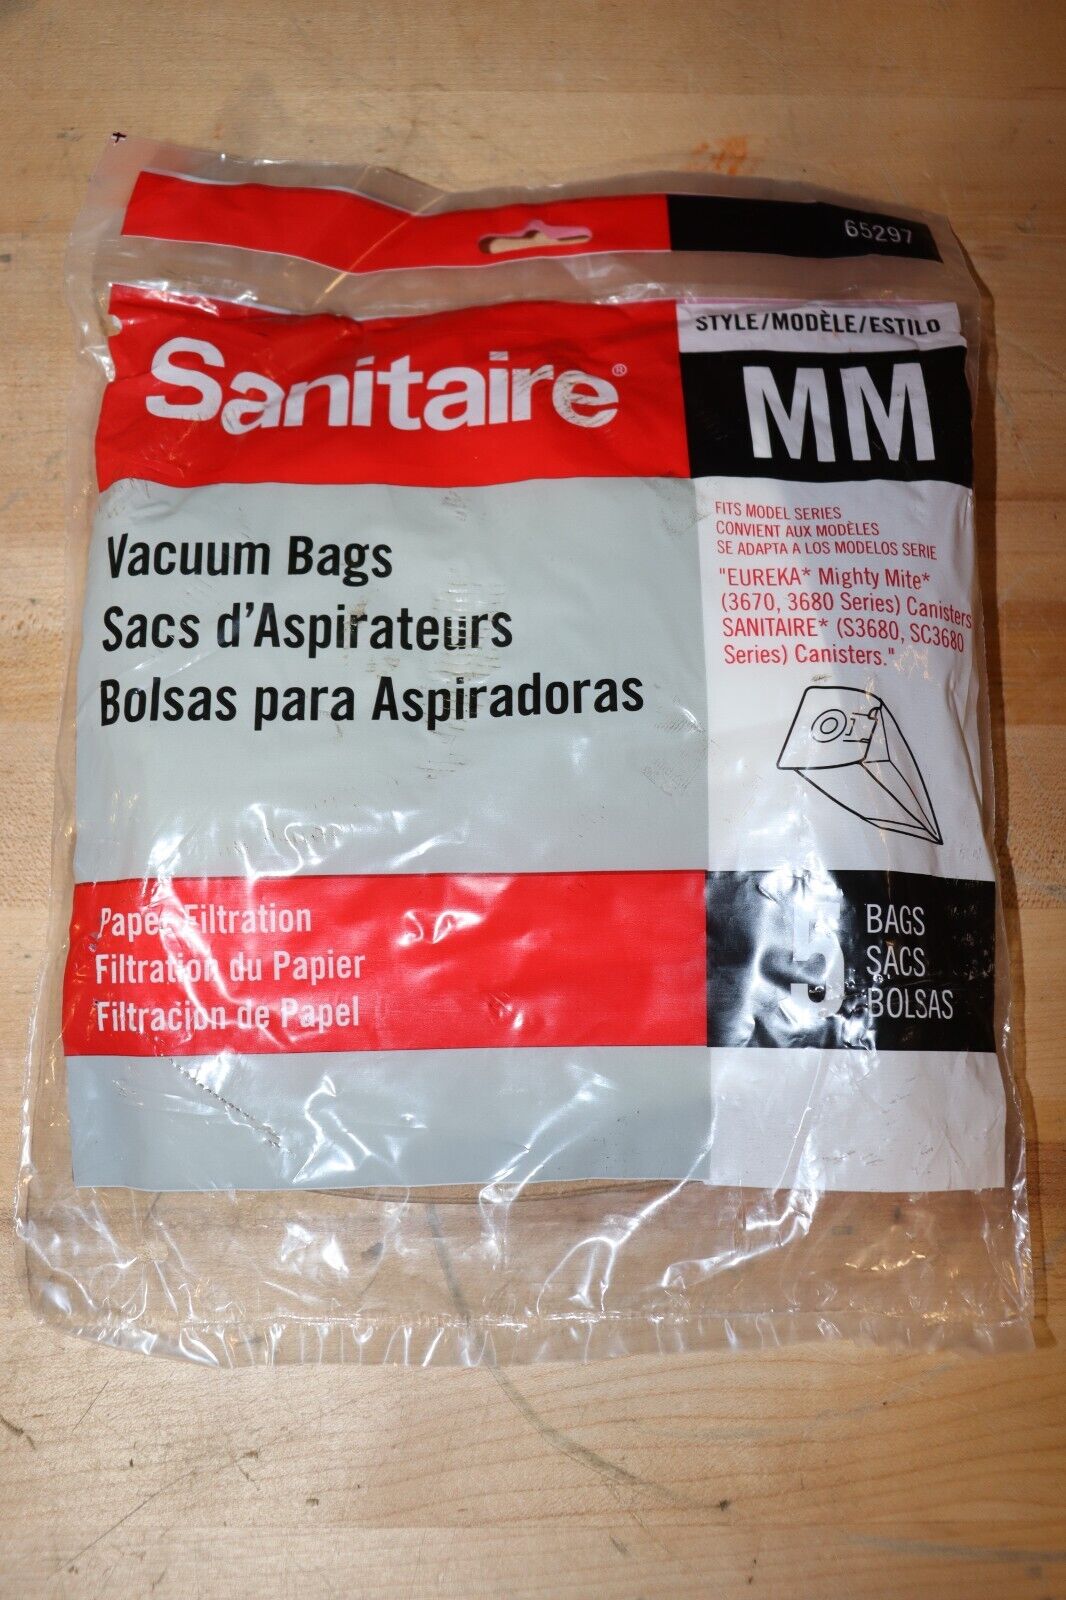 Vacuum Bags MM 652975 Pack Sanitaire Eureka Mighty Might